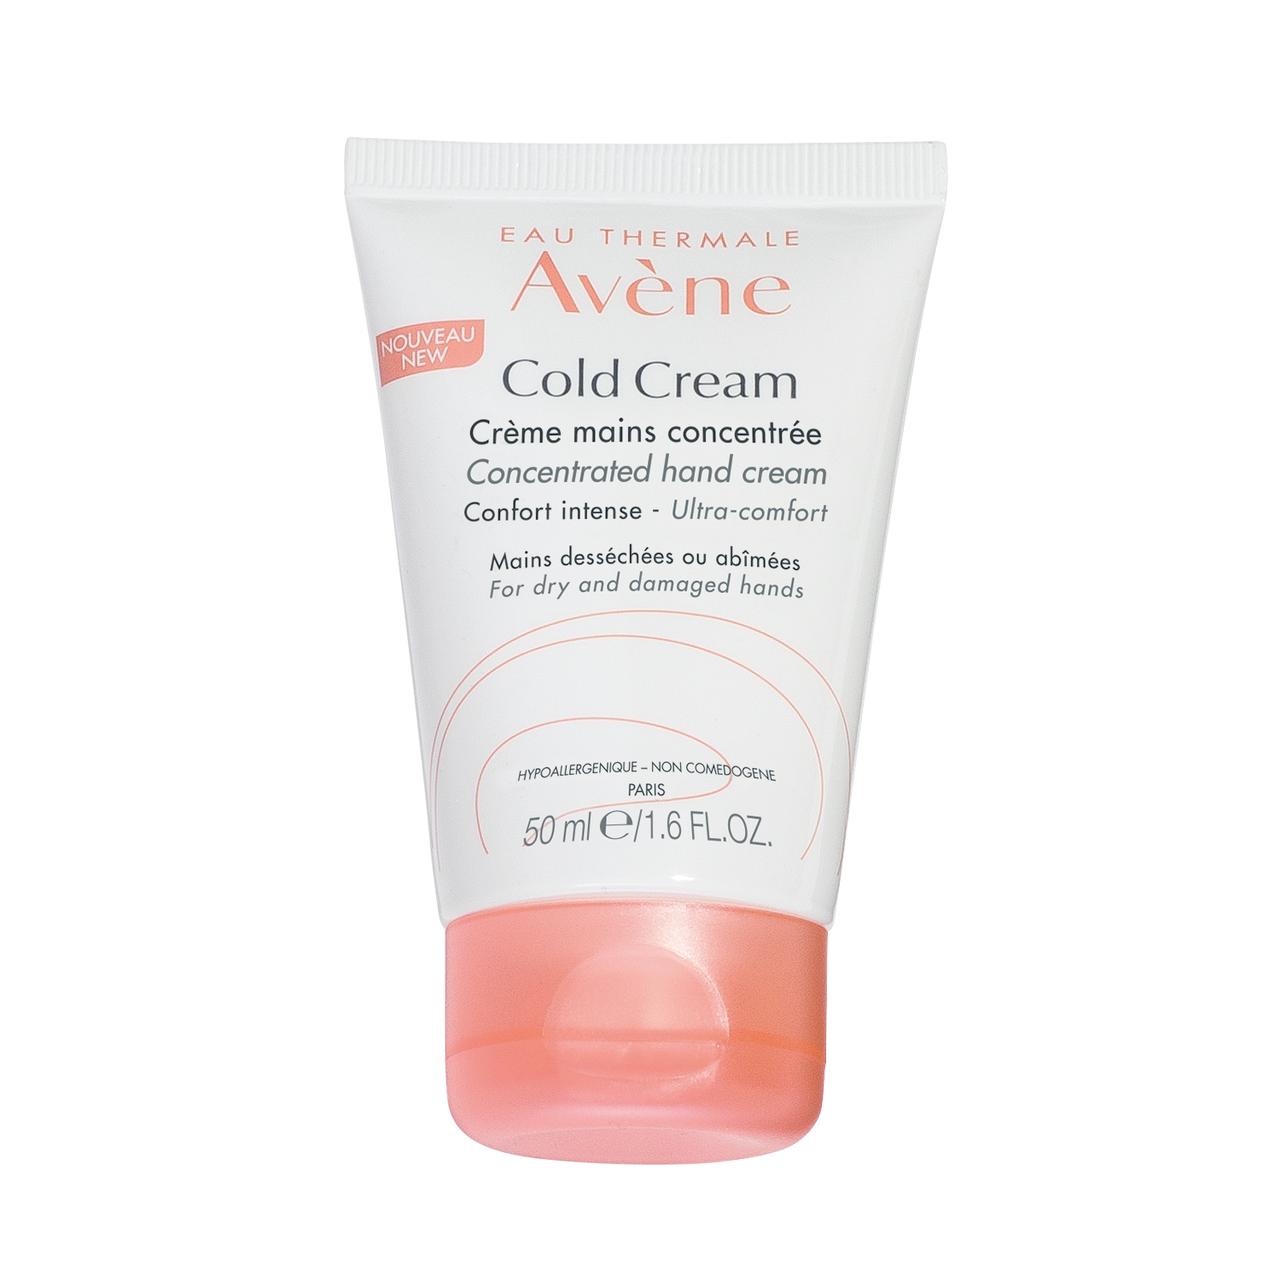 Avene Cold Cream Hand Cream, 1.6 Fl Oz - image 1 of 3